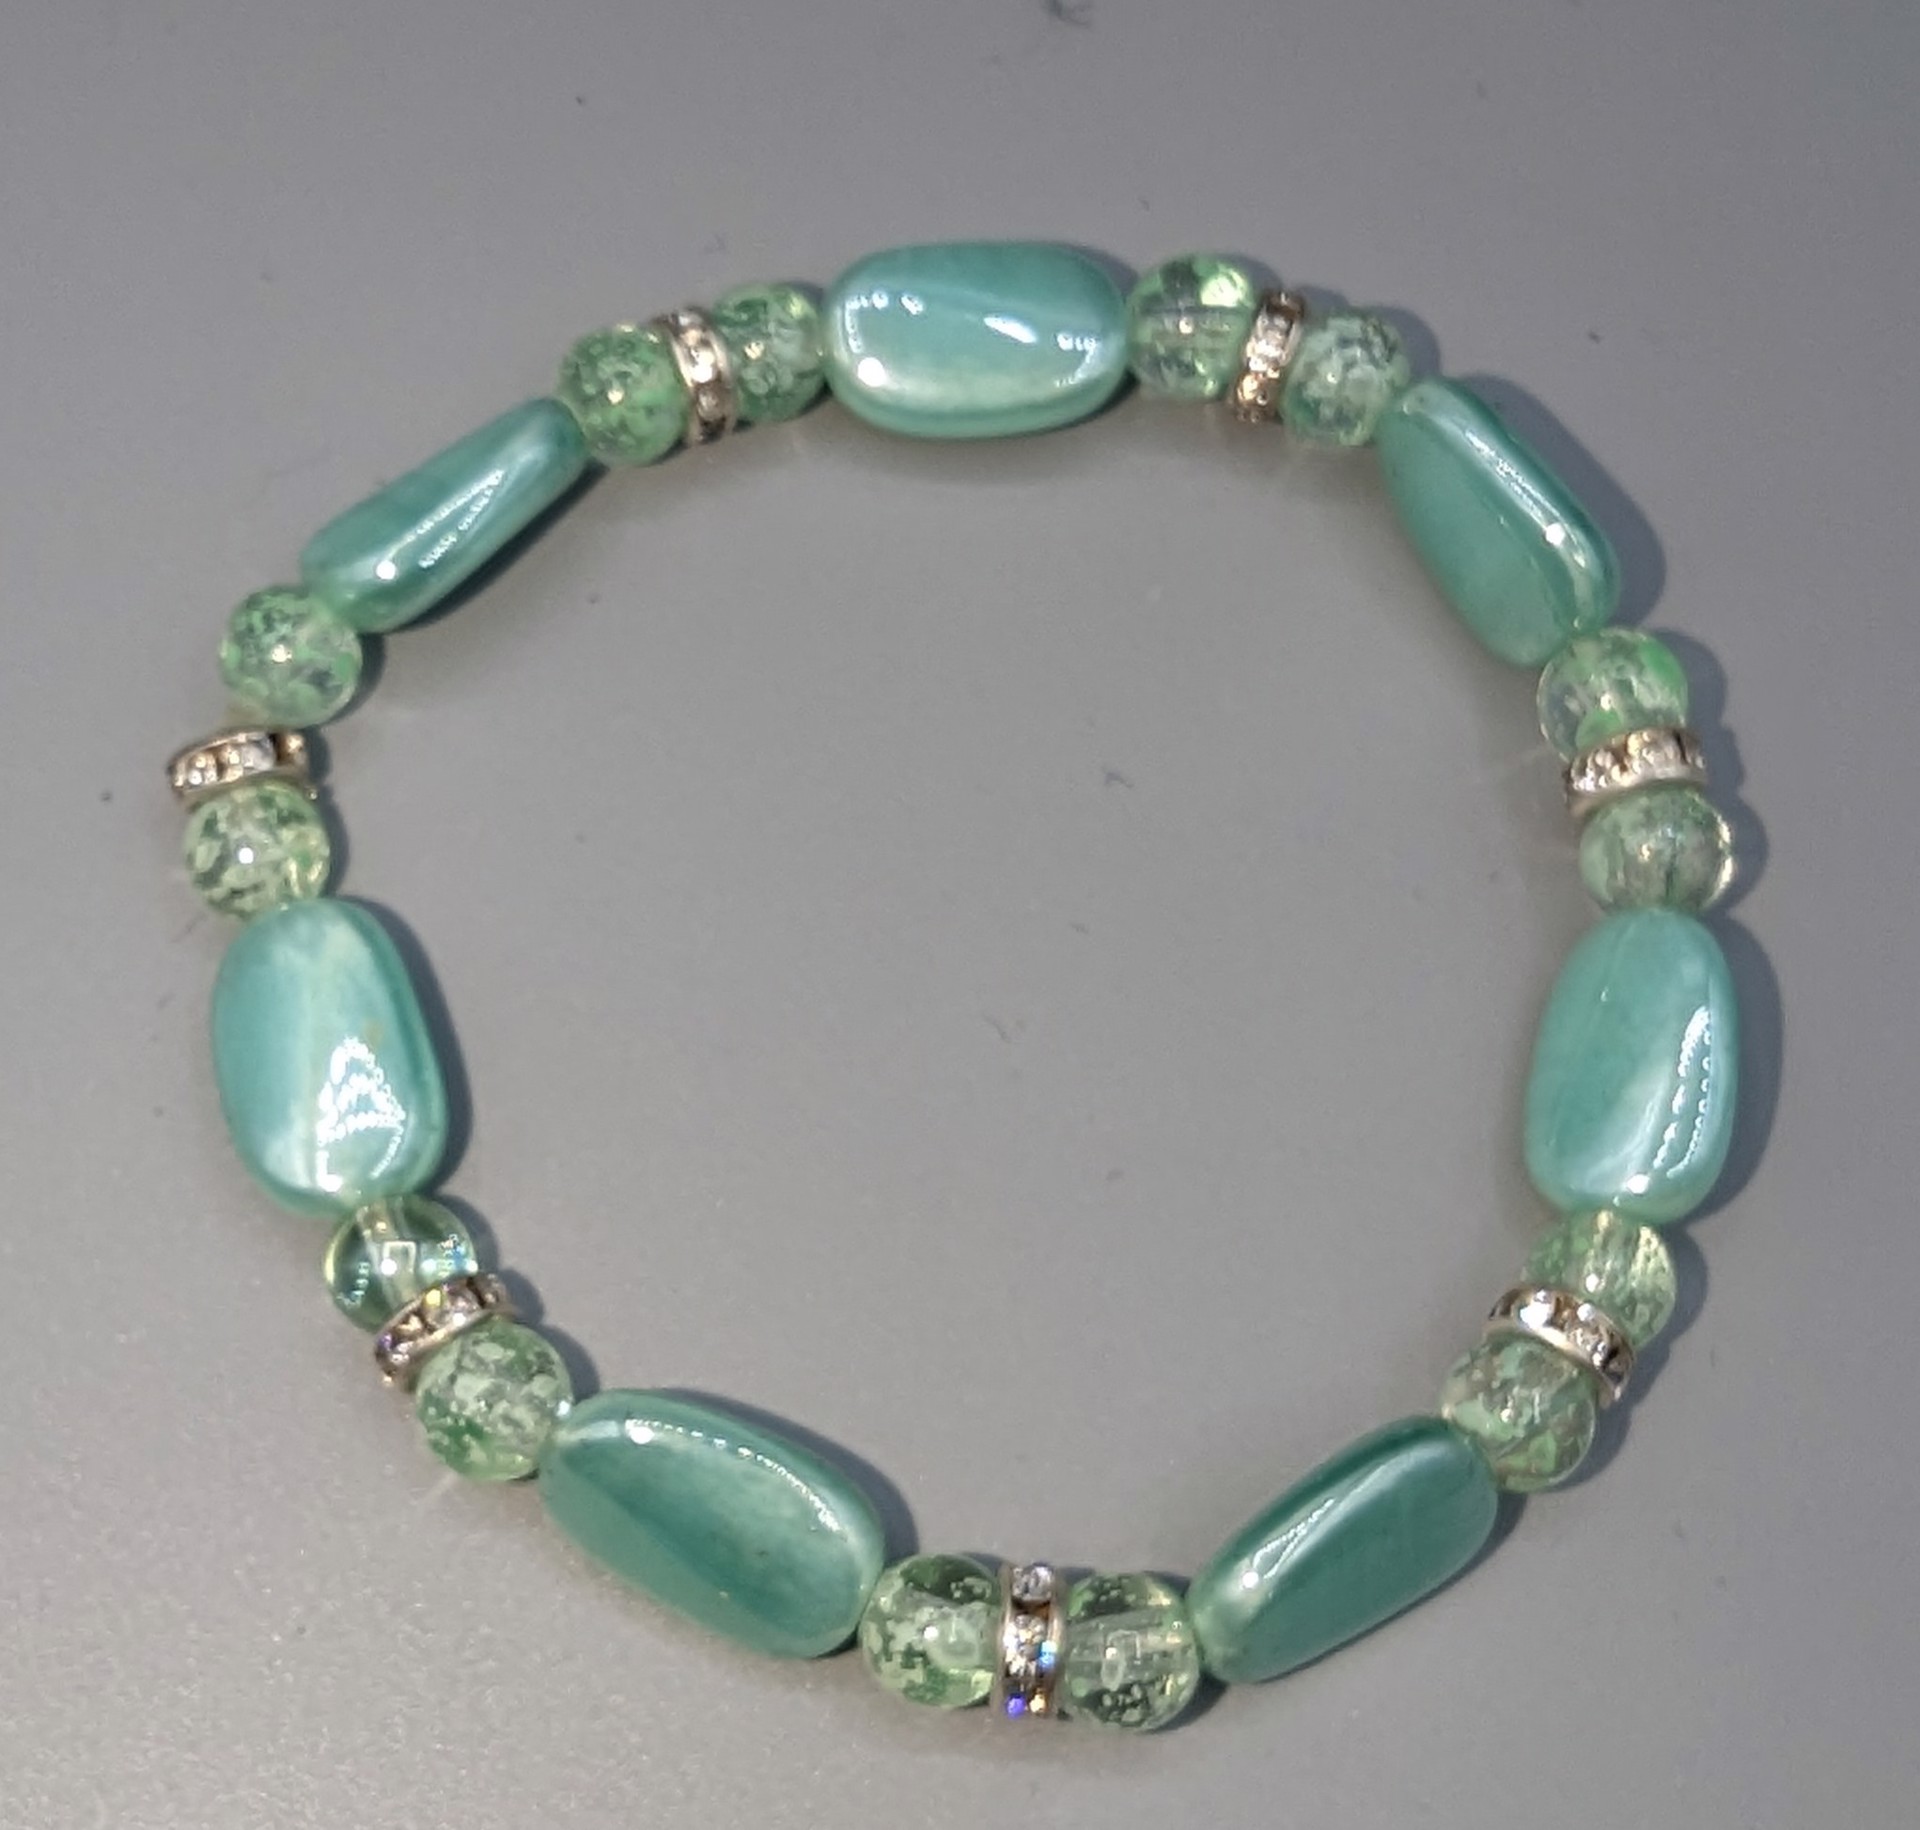 Crystal & Green bead bracelet by Betty Binder